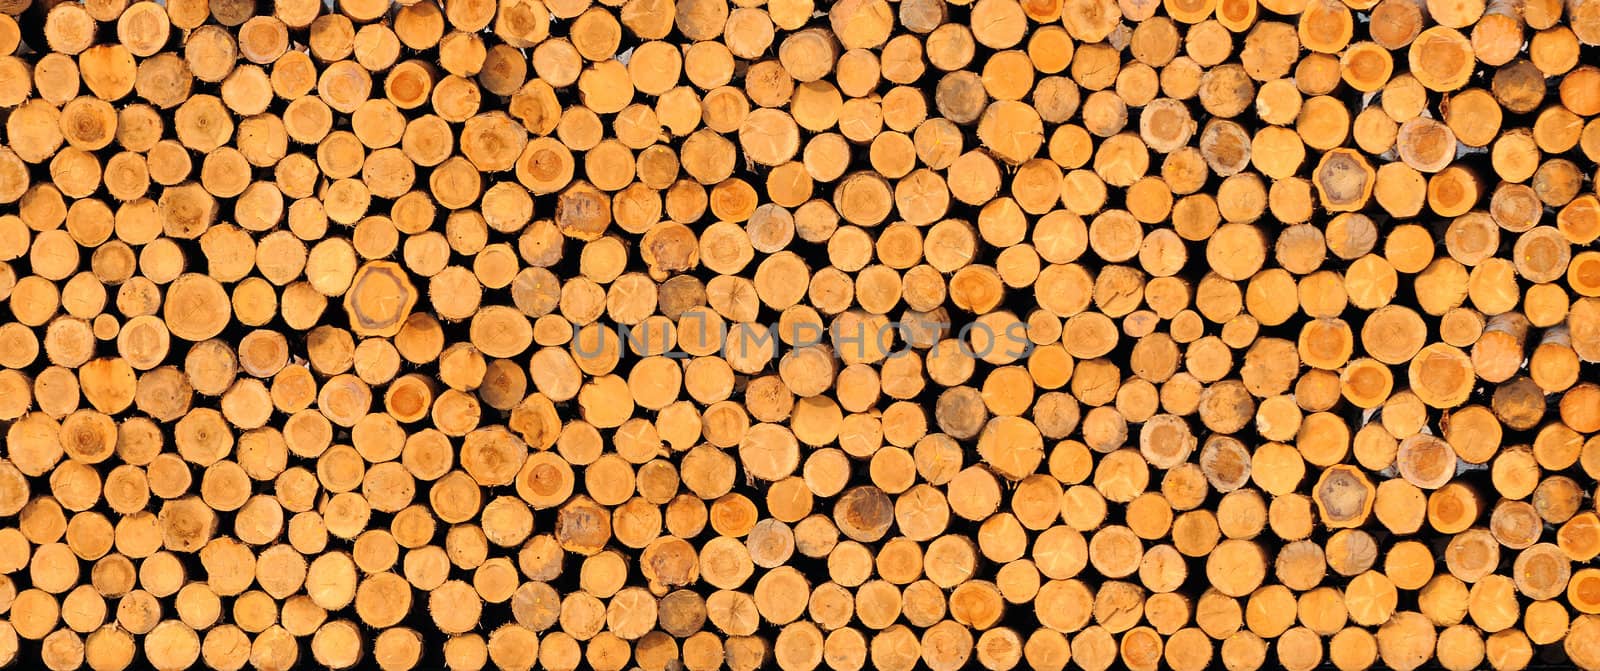 Stacked timber logs by Sevaljevic